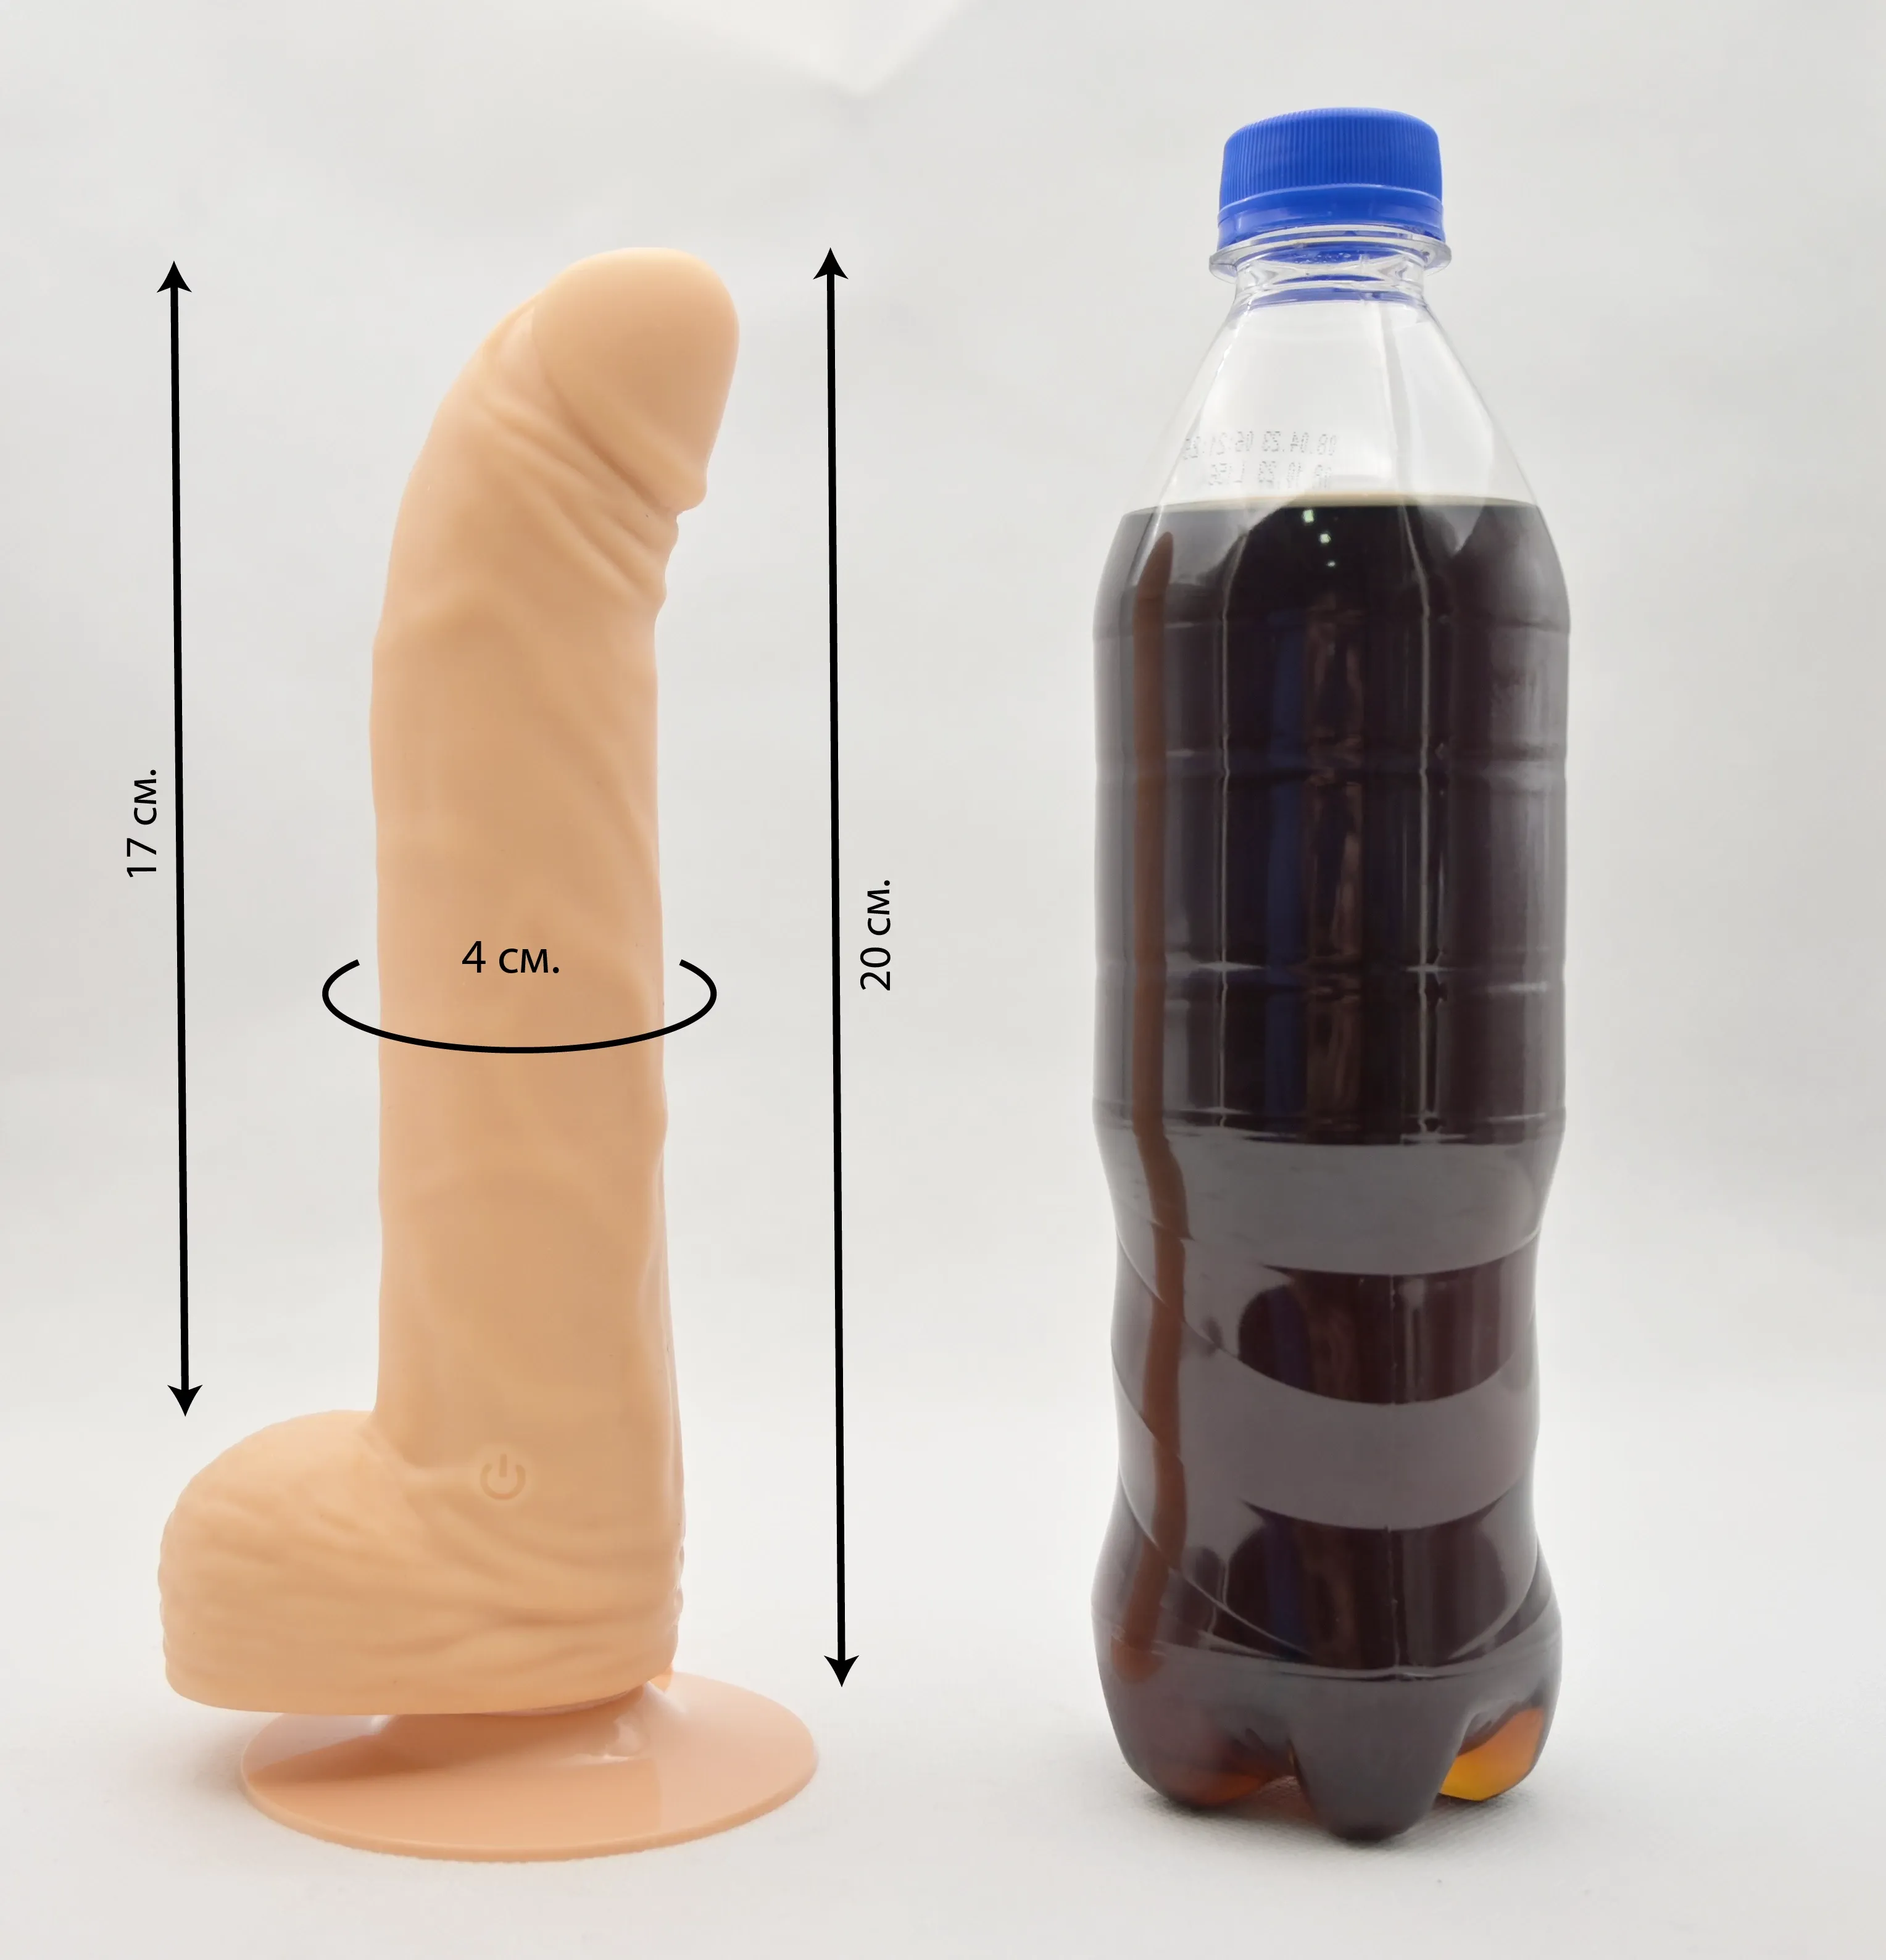 Размеры One Touch Silicone и сравнение с бутылкой колы